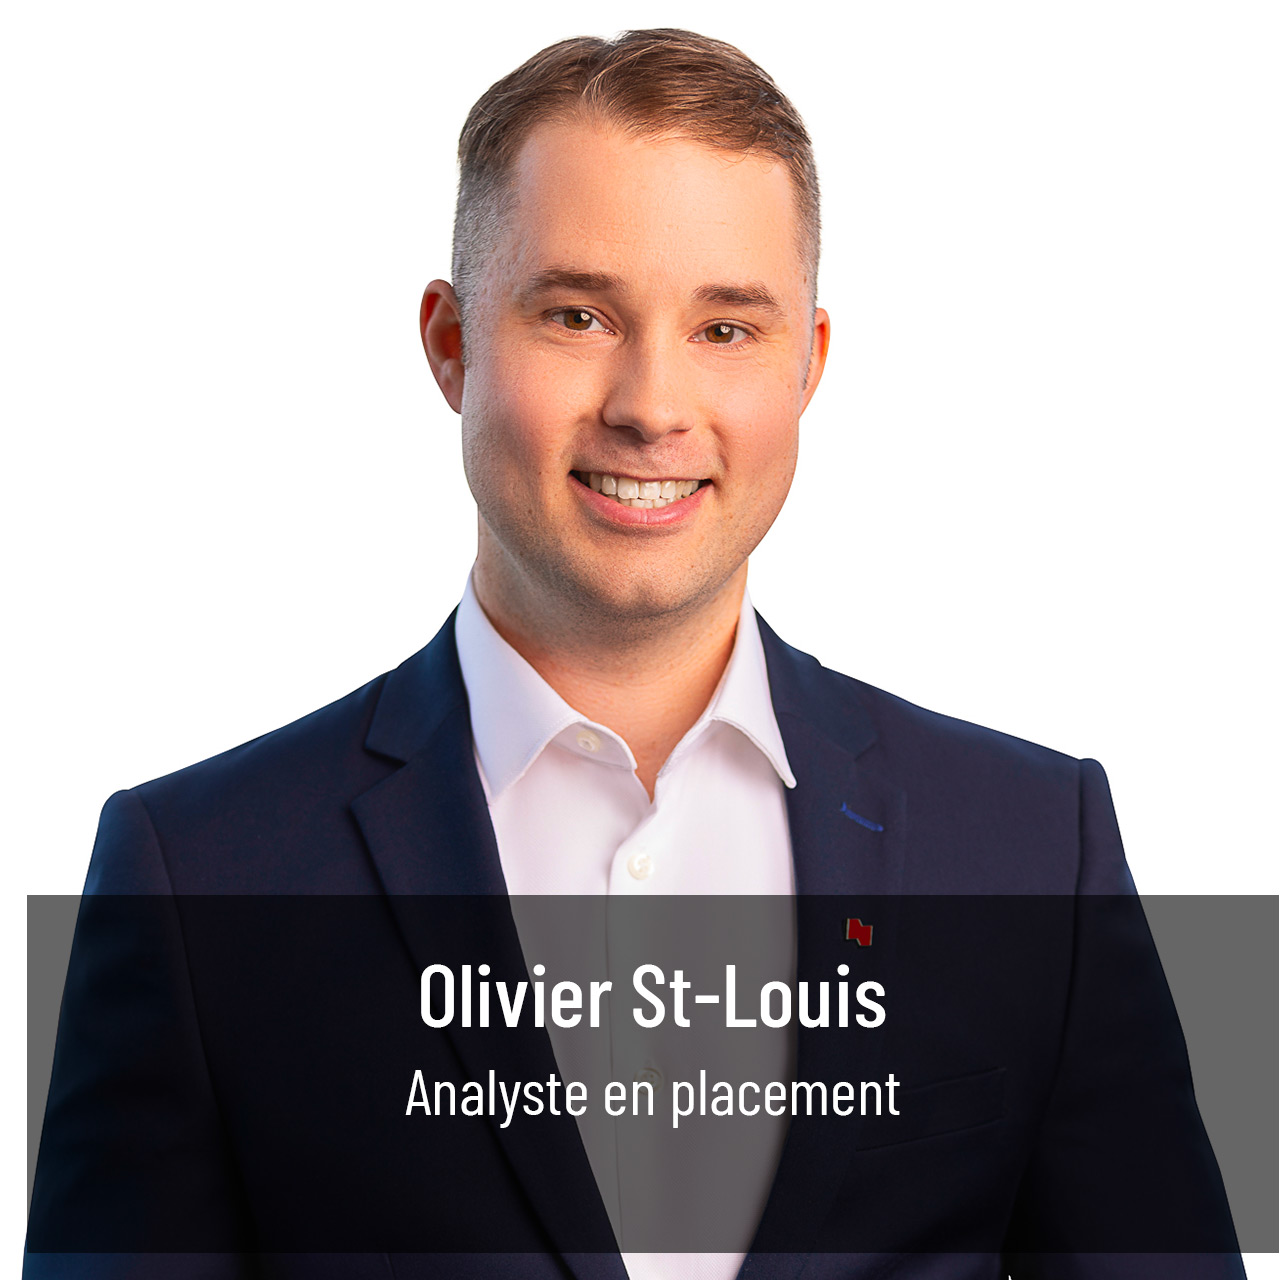 Olivier St-Louis